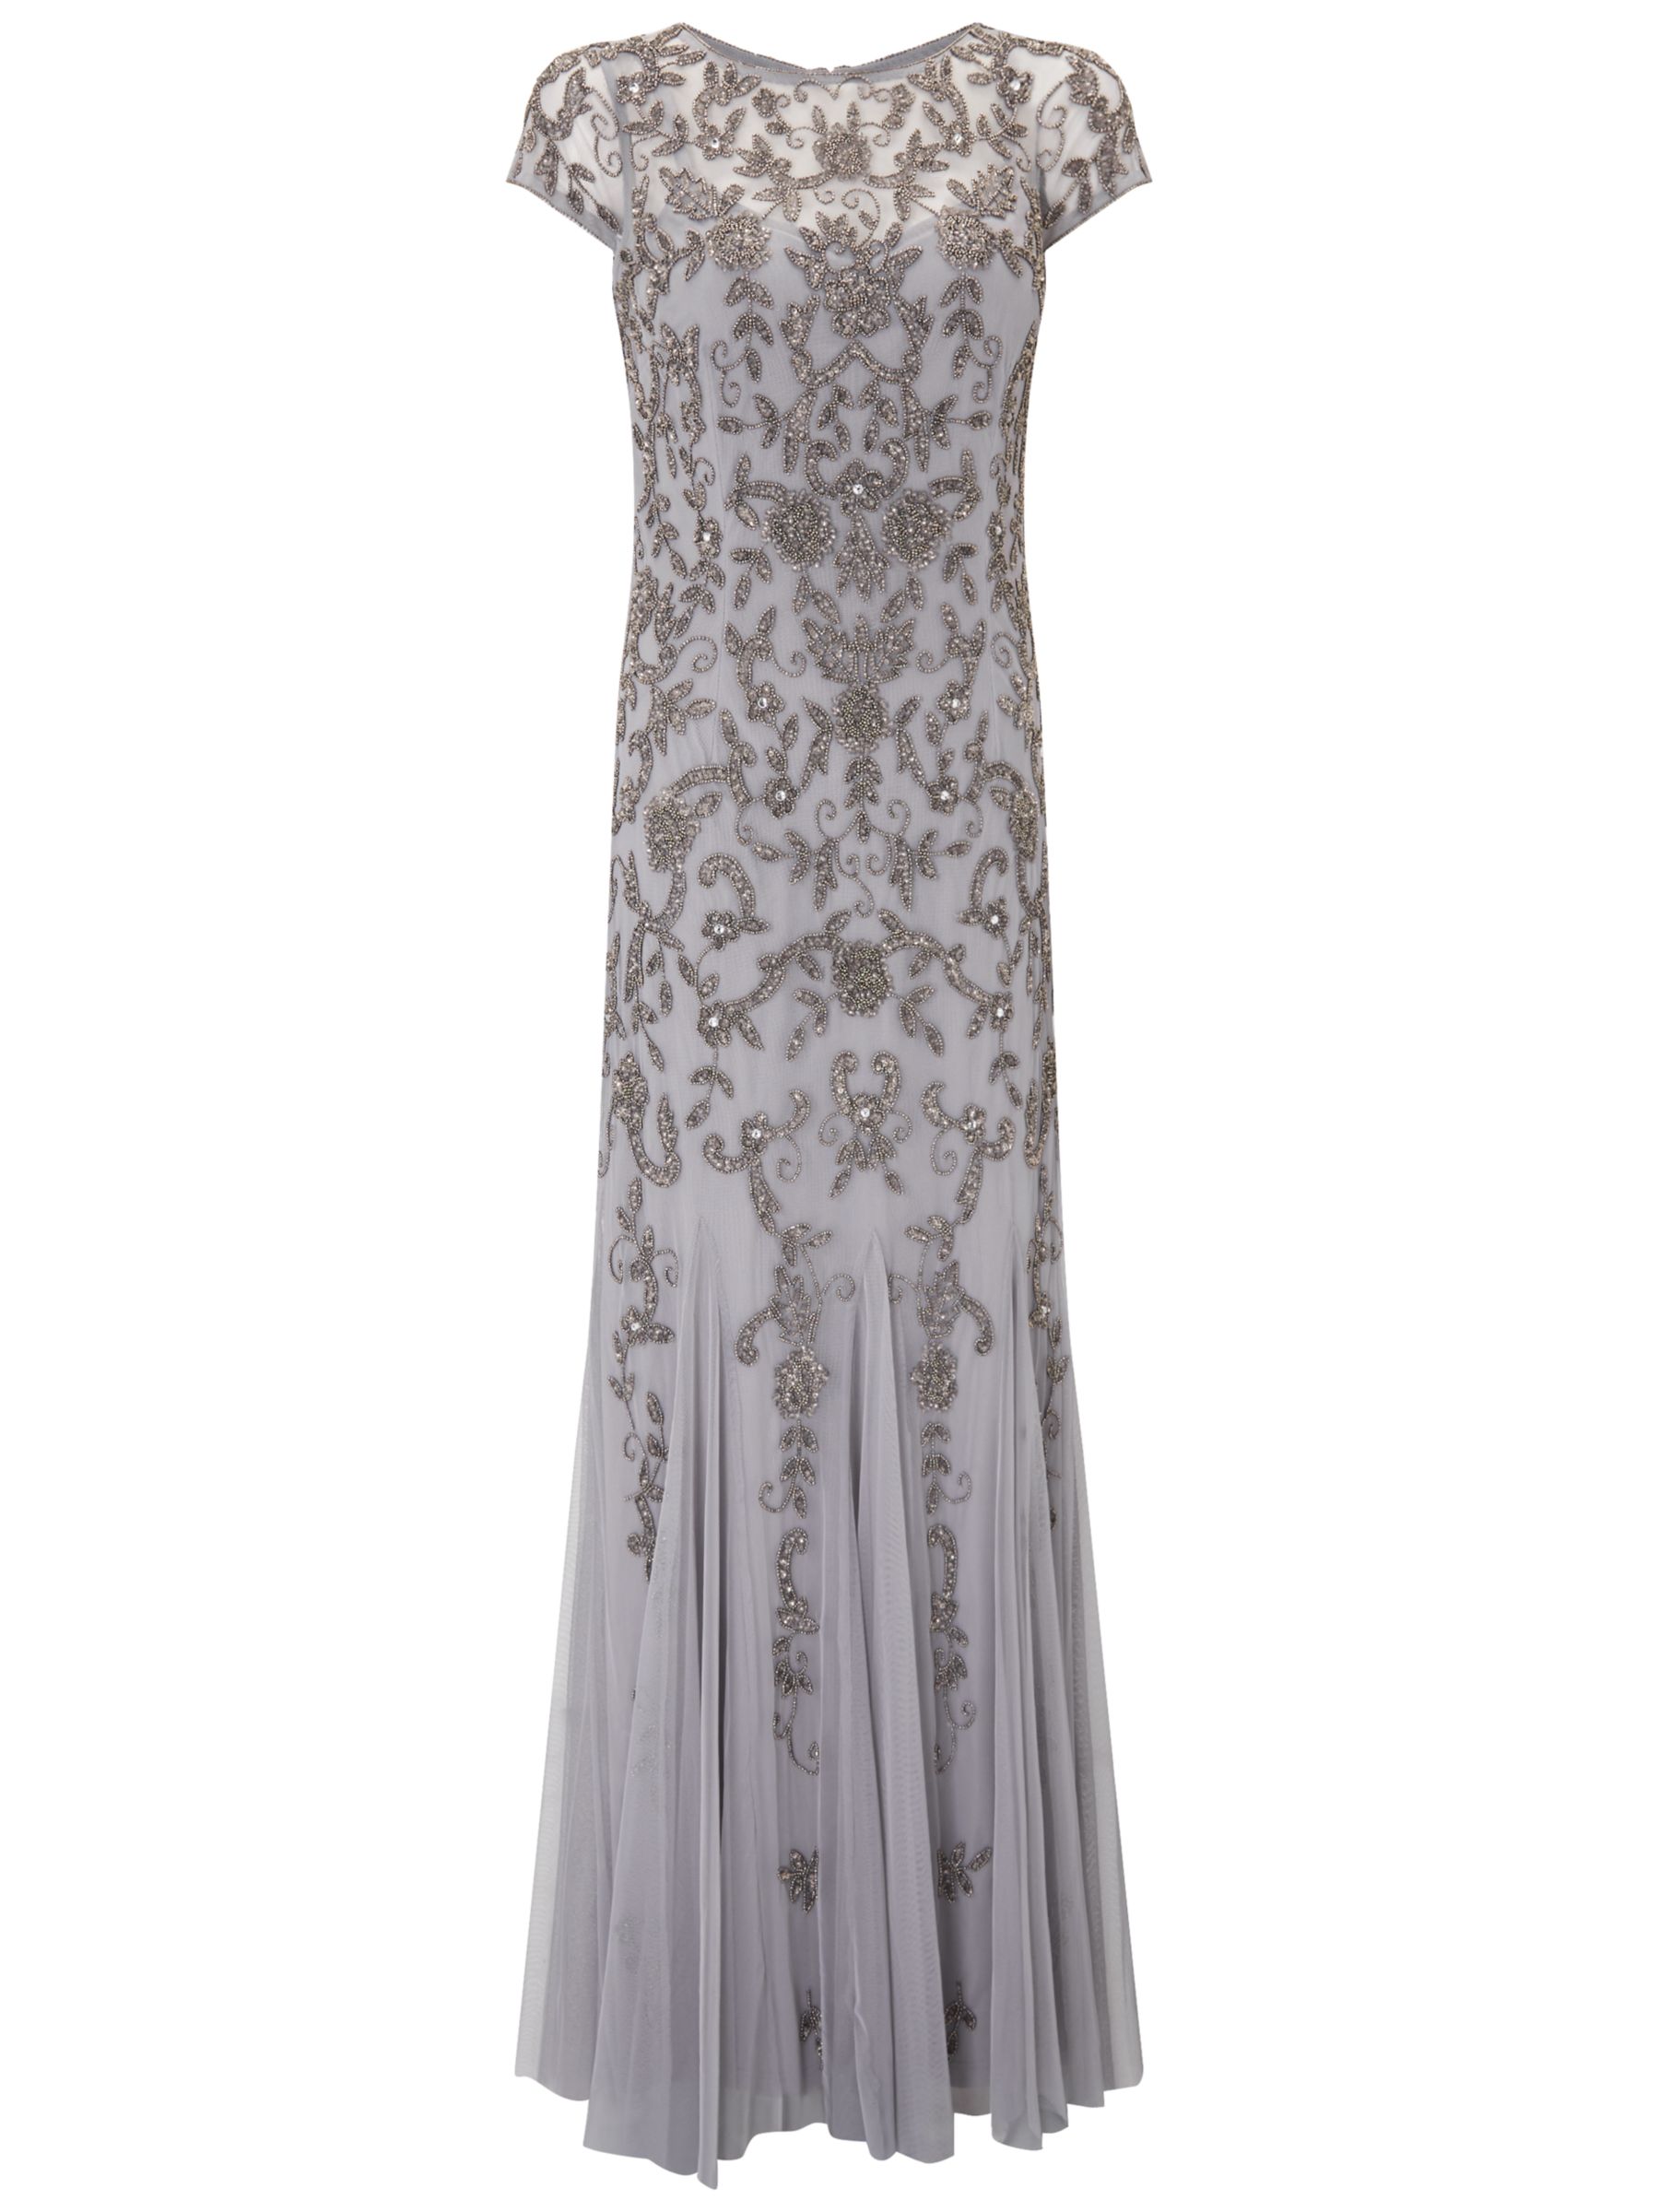 Adrianna Papell Long Beaded Mermaid Dress, Silver/Grey at John Lewis ...